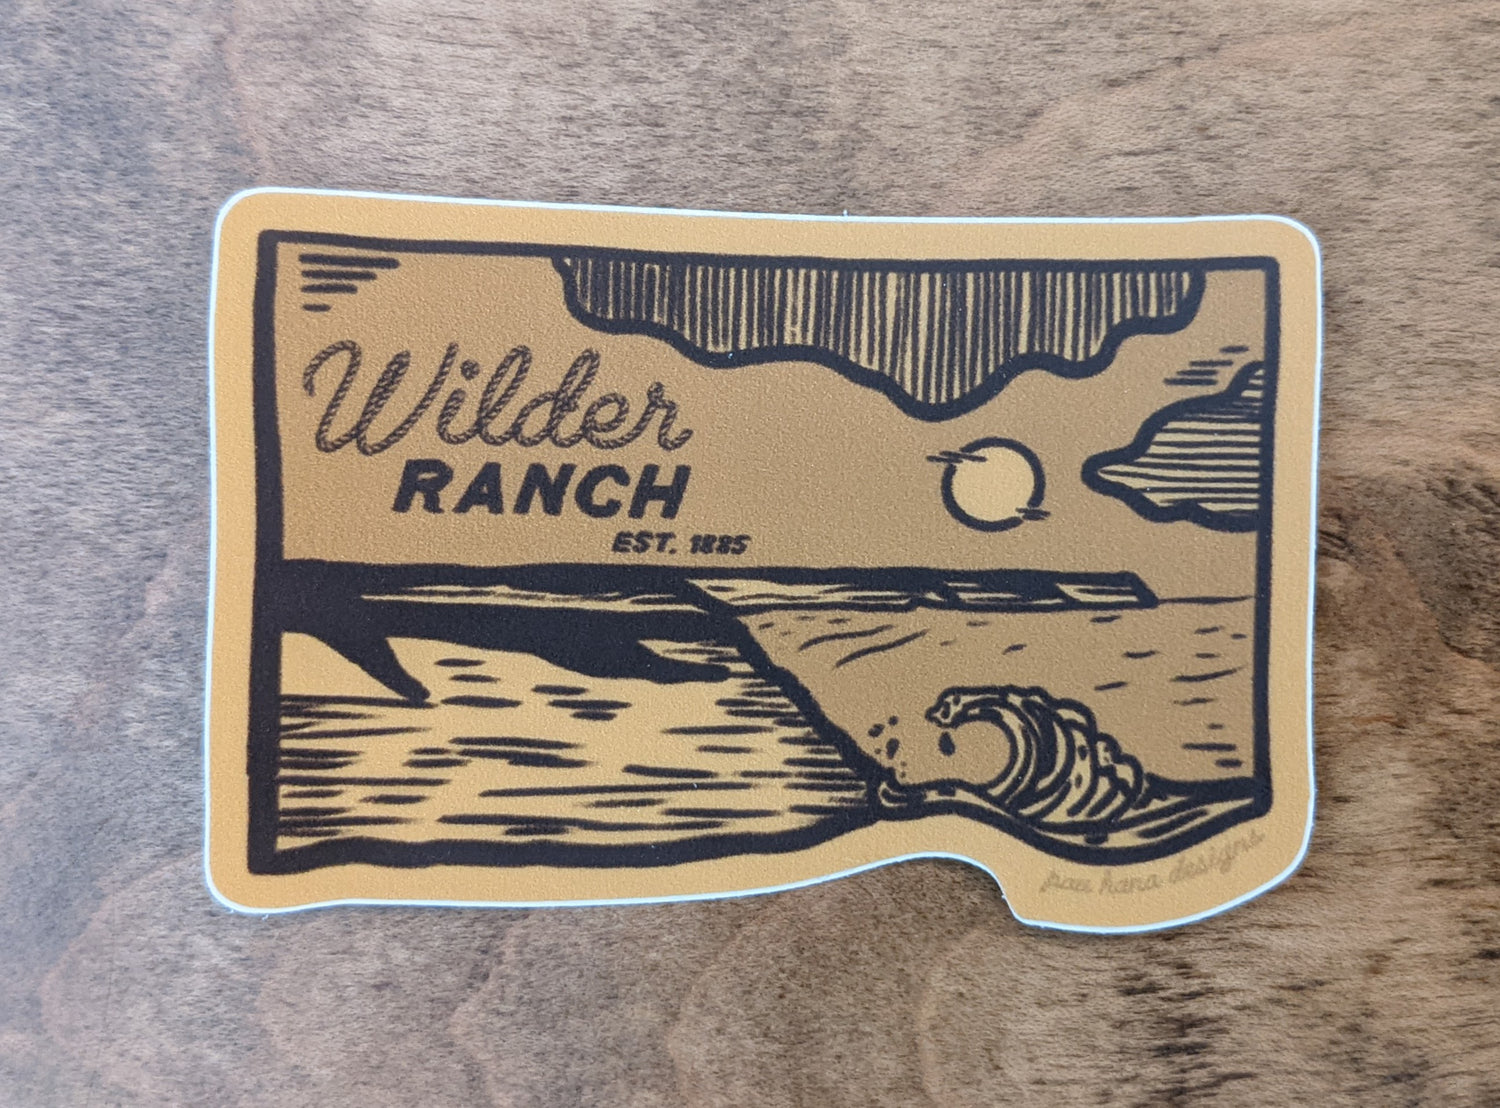 Wilder Ranch coastal bluff sticker by Pau Hana Designs